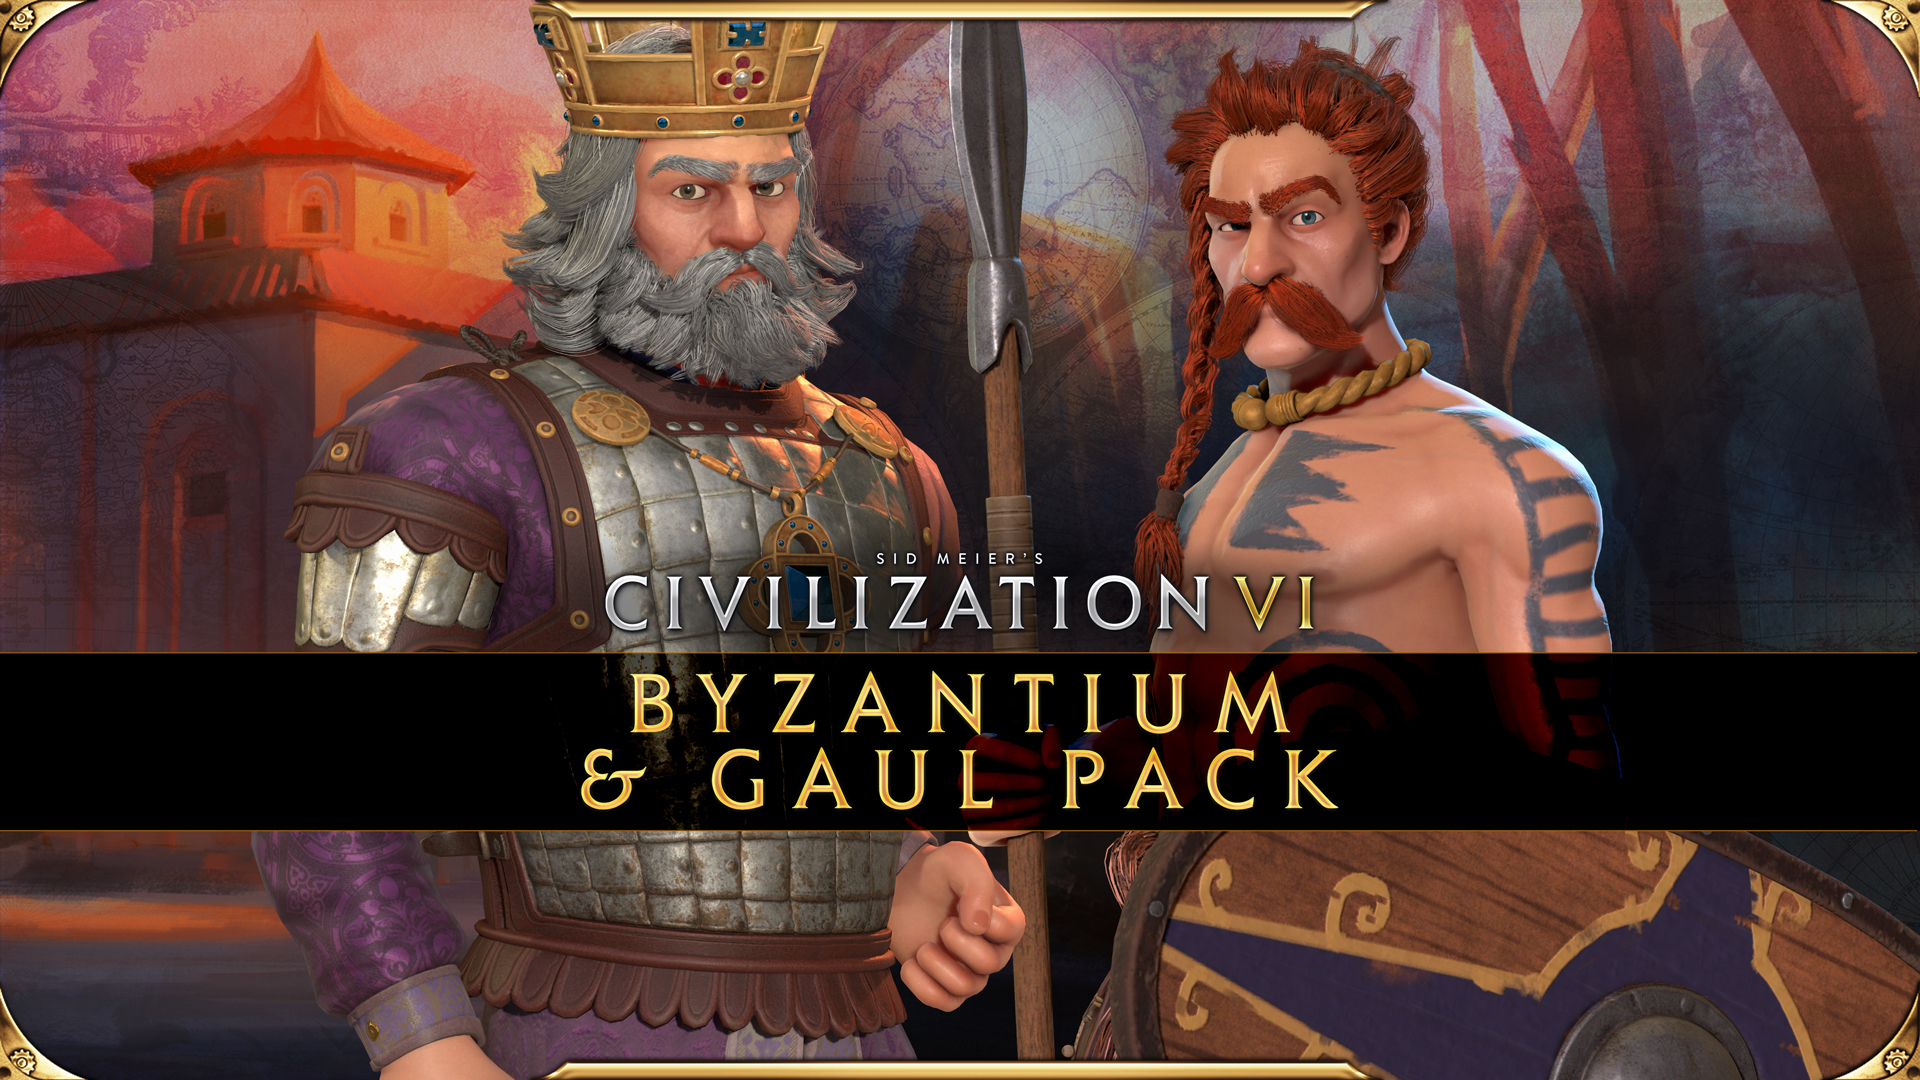 civilization vi - new frontier pass